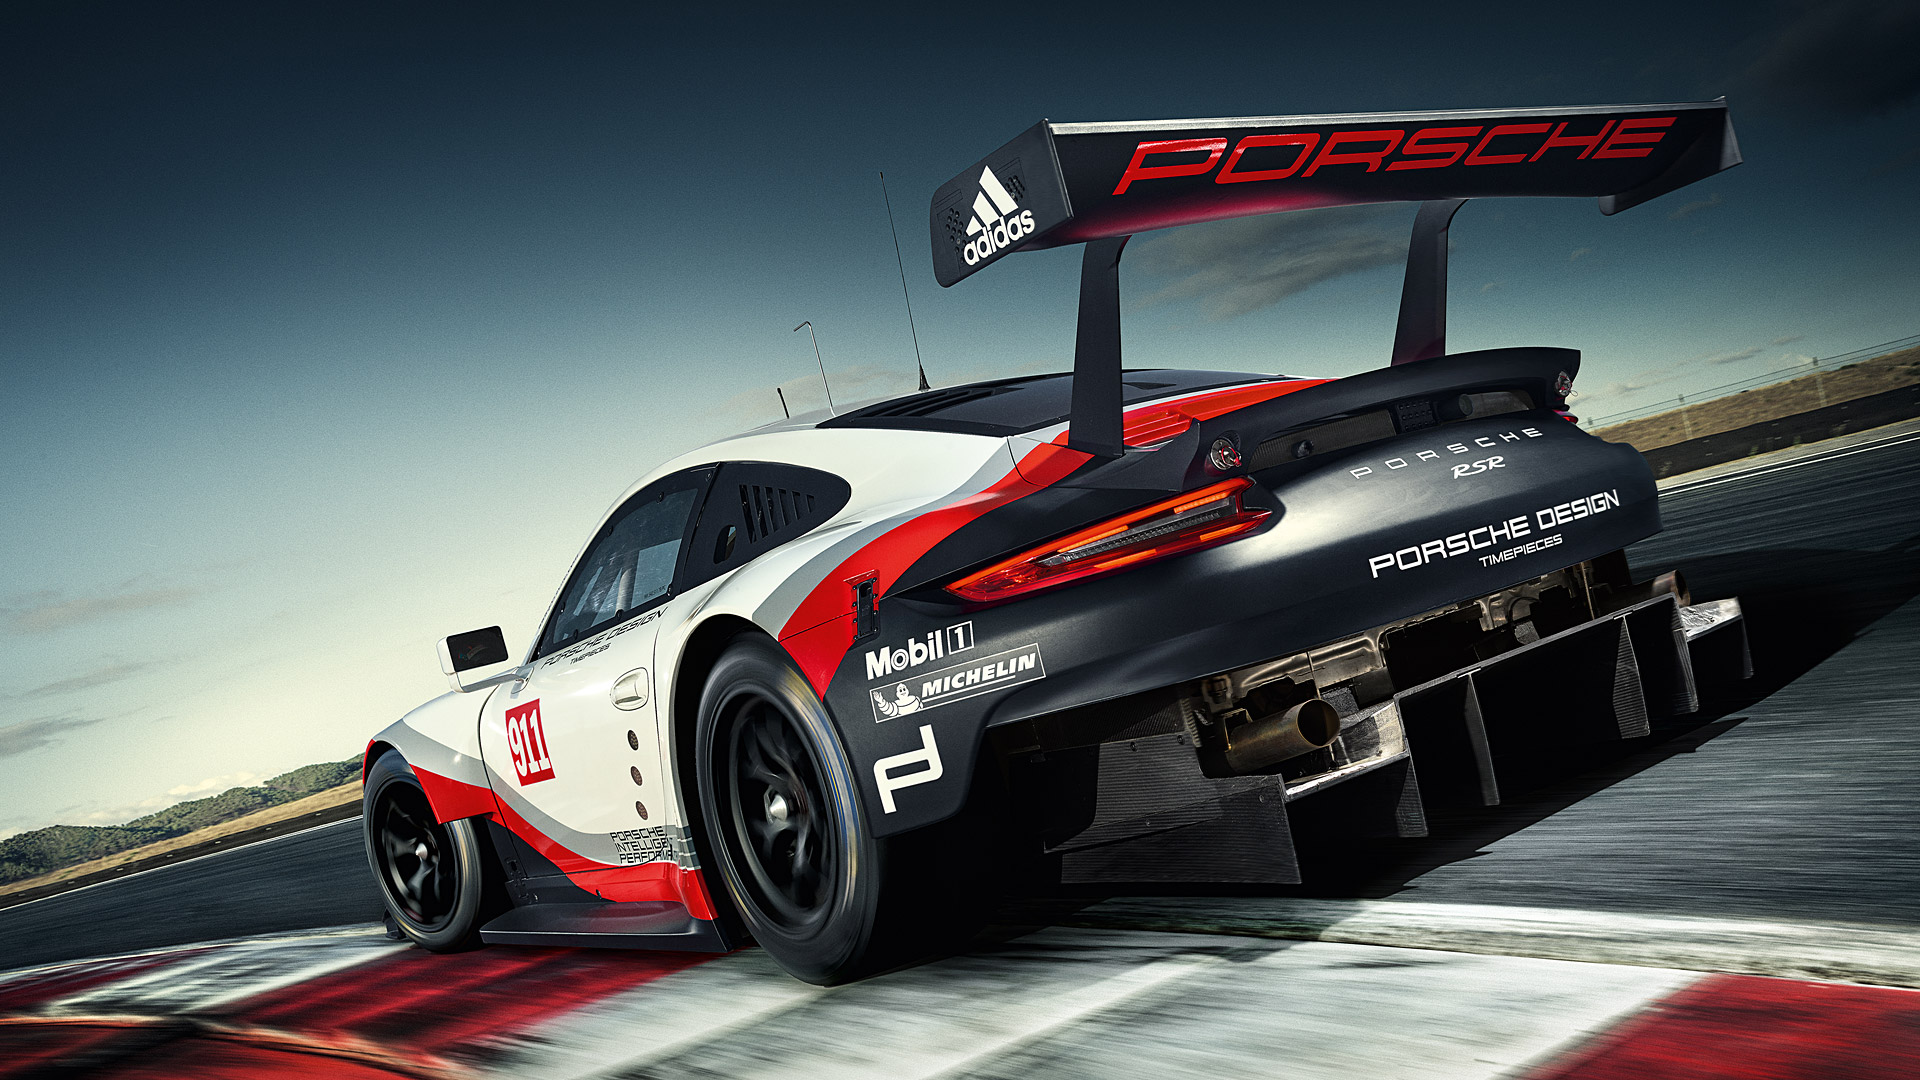 Porsche Rsr Wallpaper Top Background